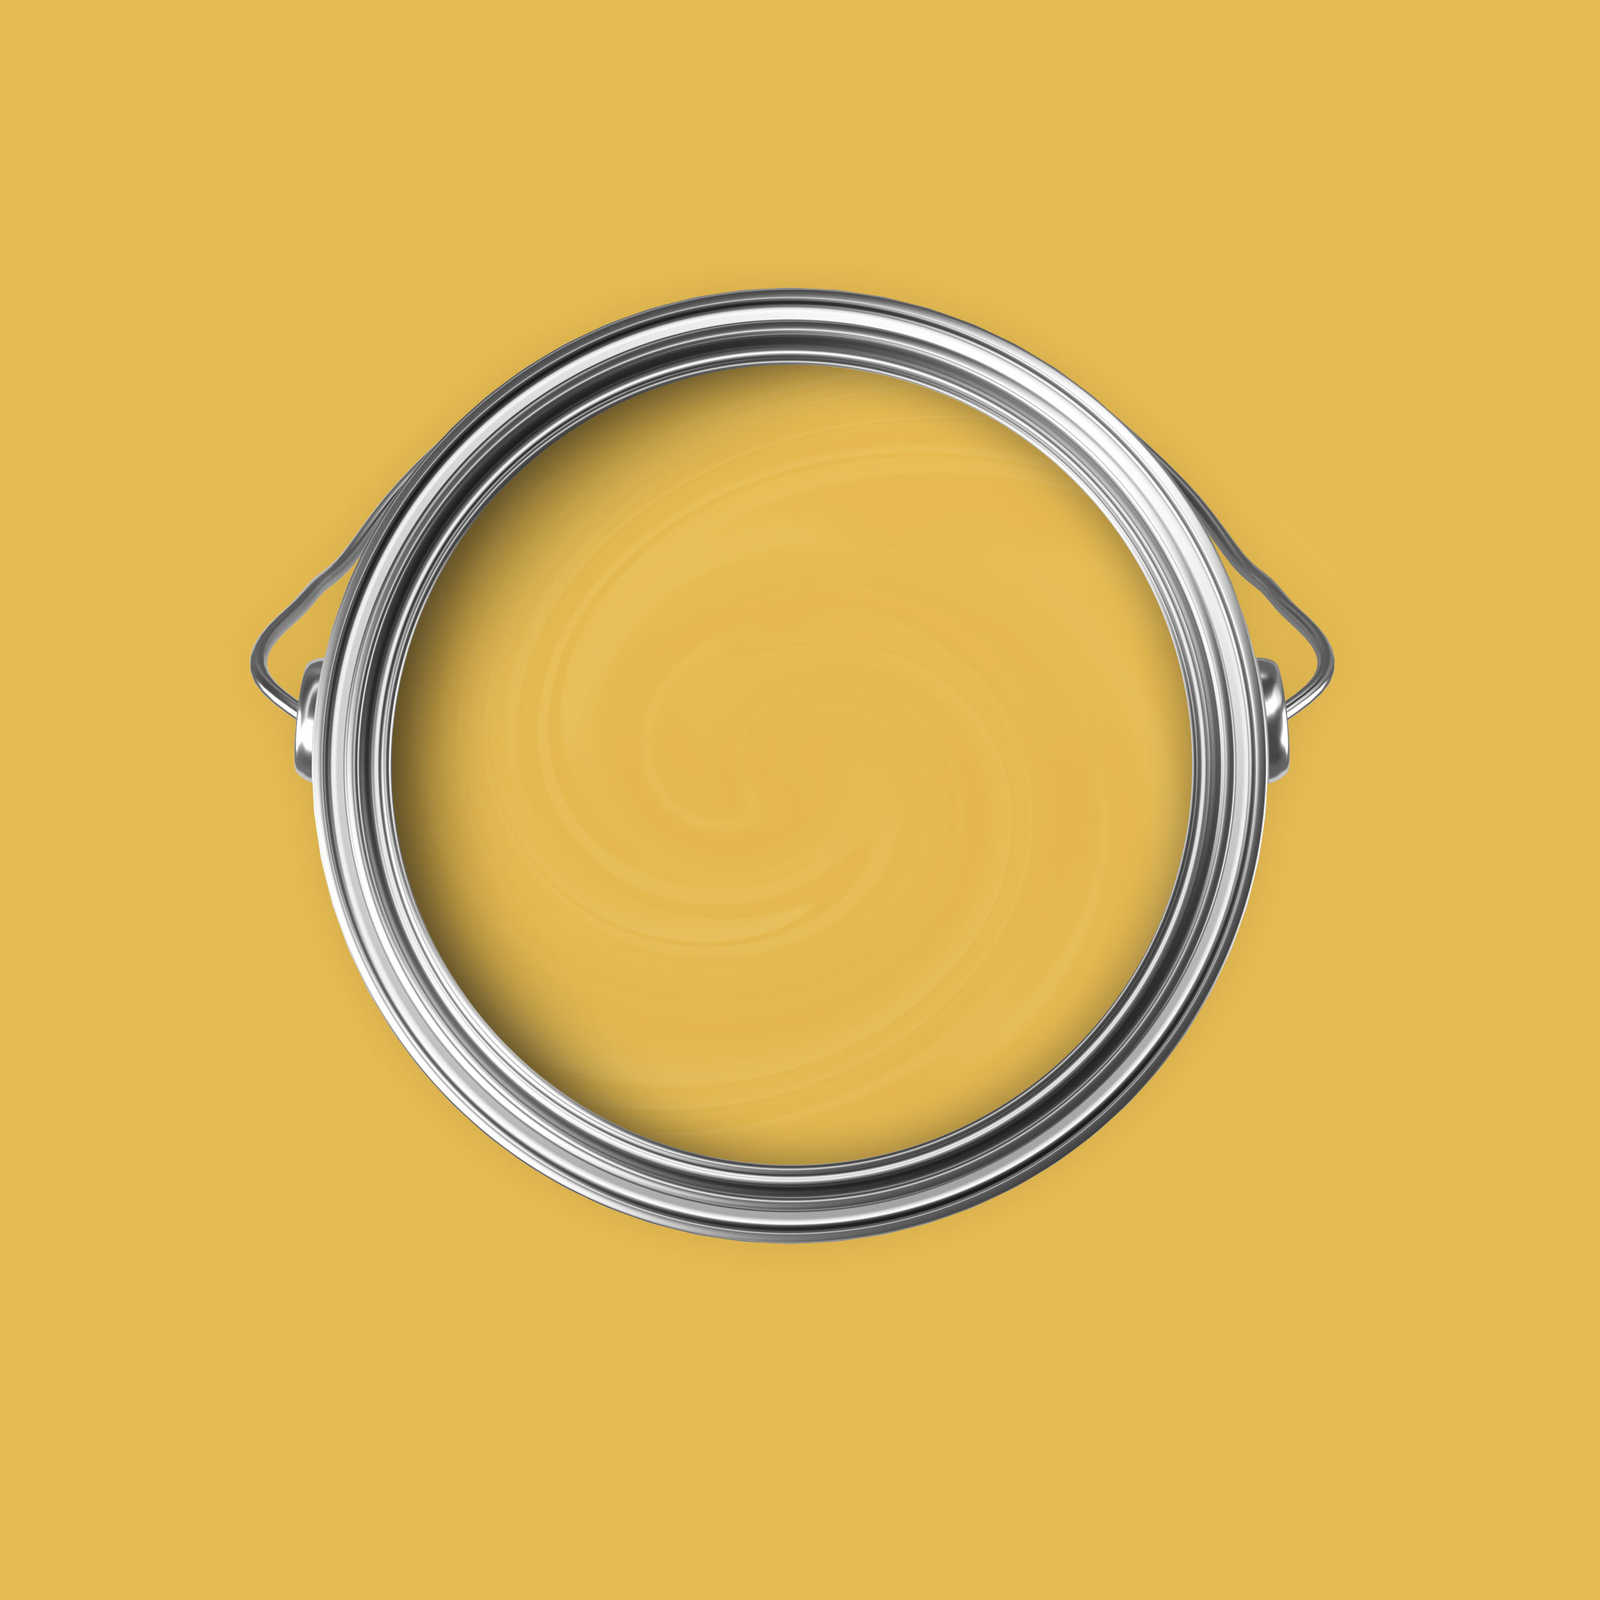             Premium Wandfarbe strahlendes Senfgelb »Juicy Yellow« NW802 – 5 Liter
        